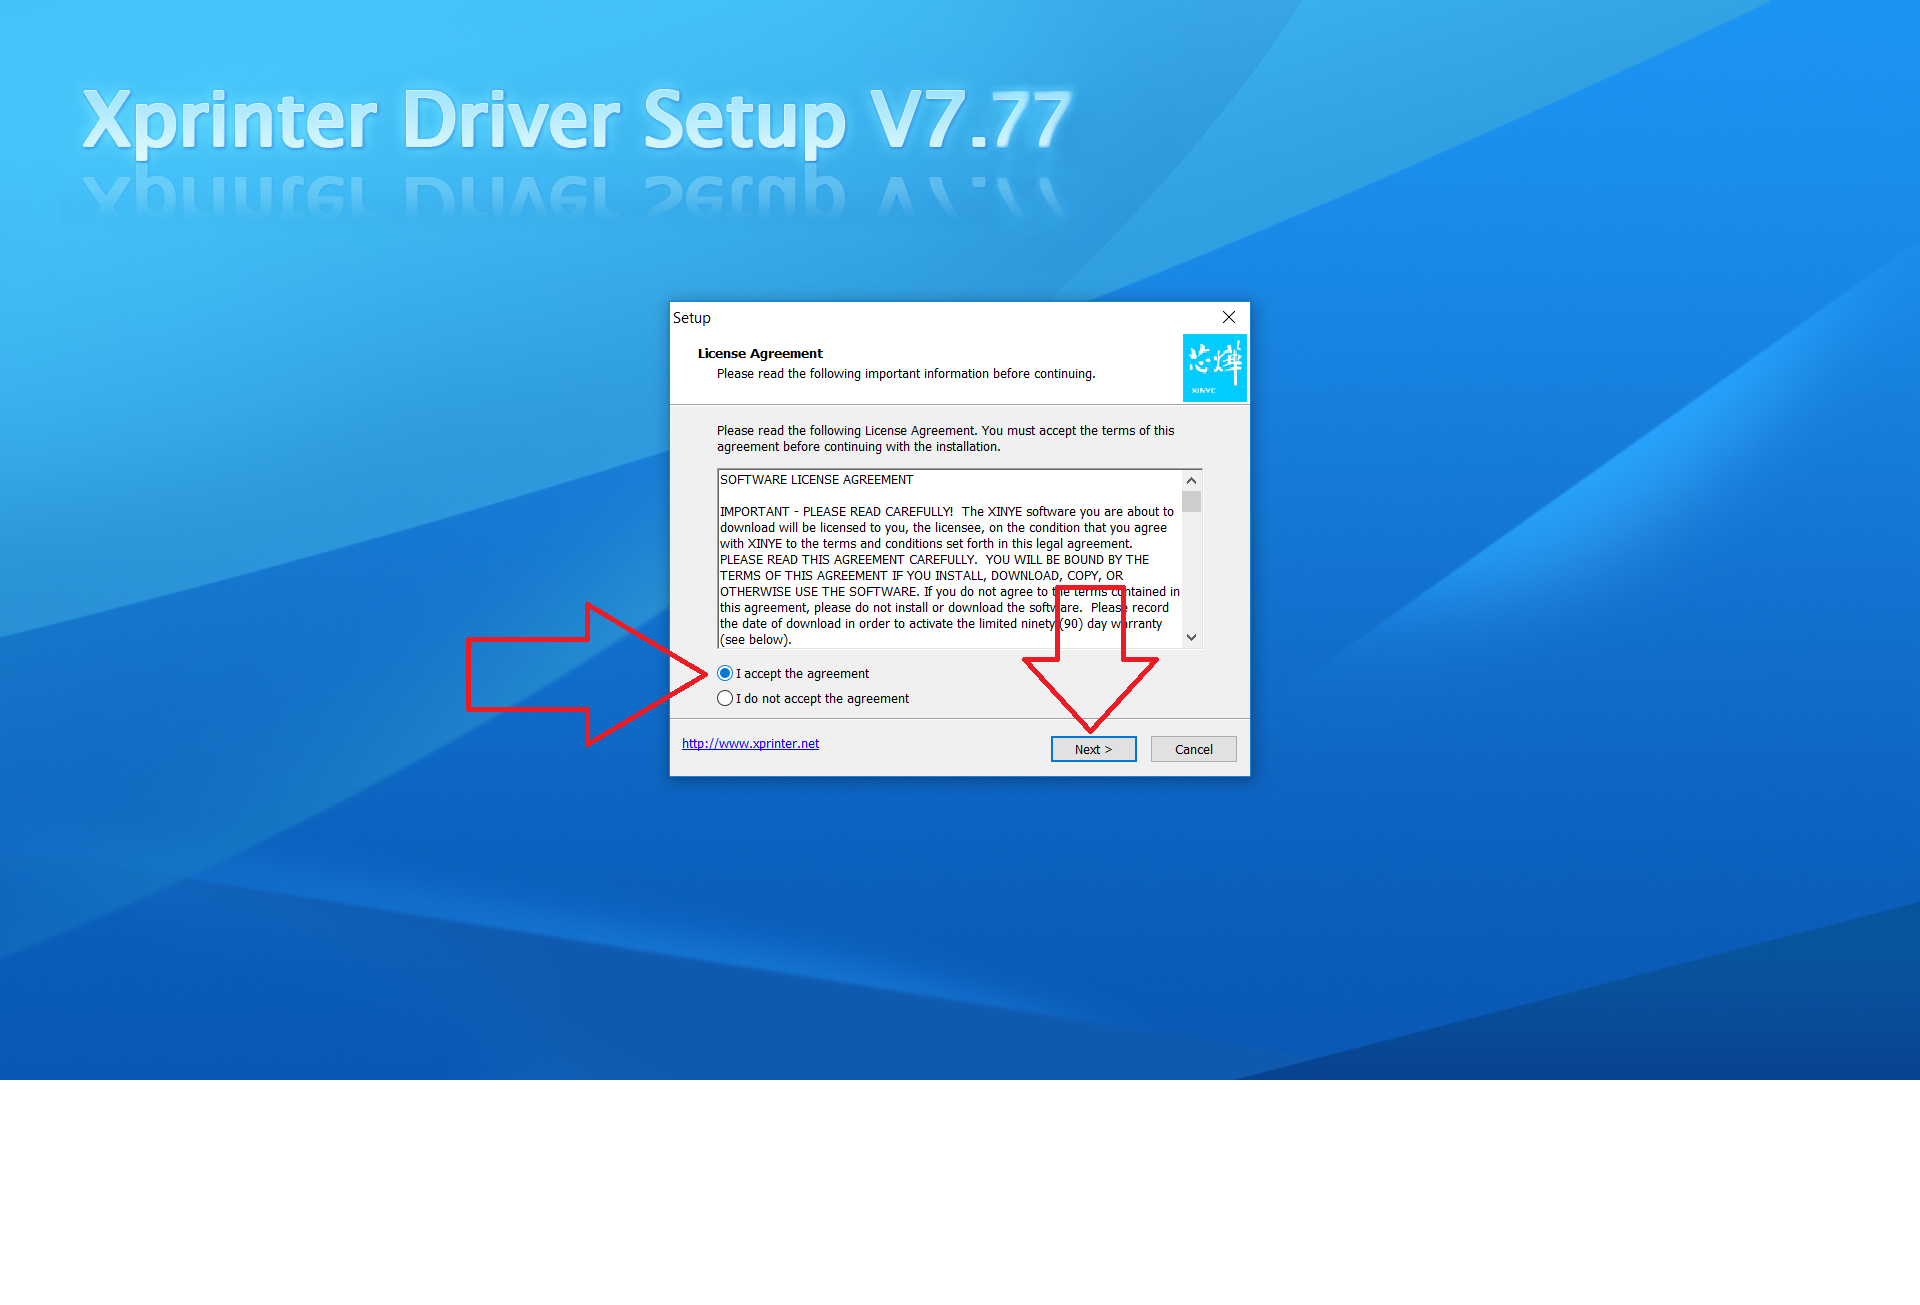 xprinter driver setup v7.77 .exe